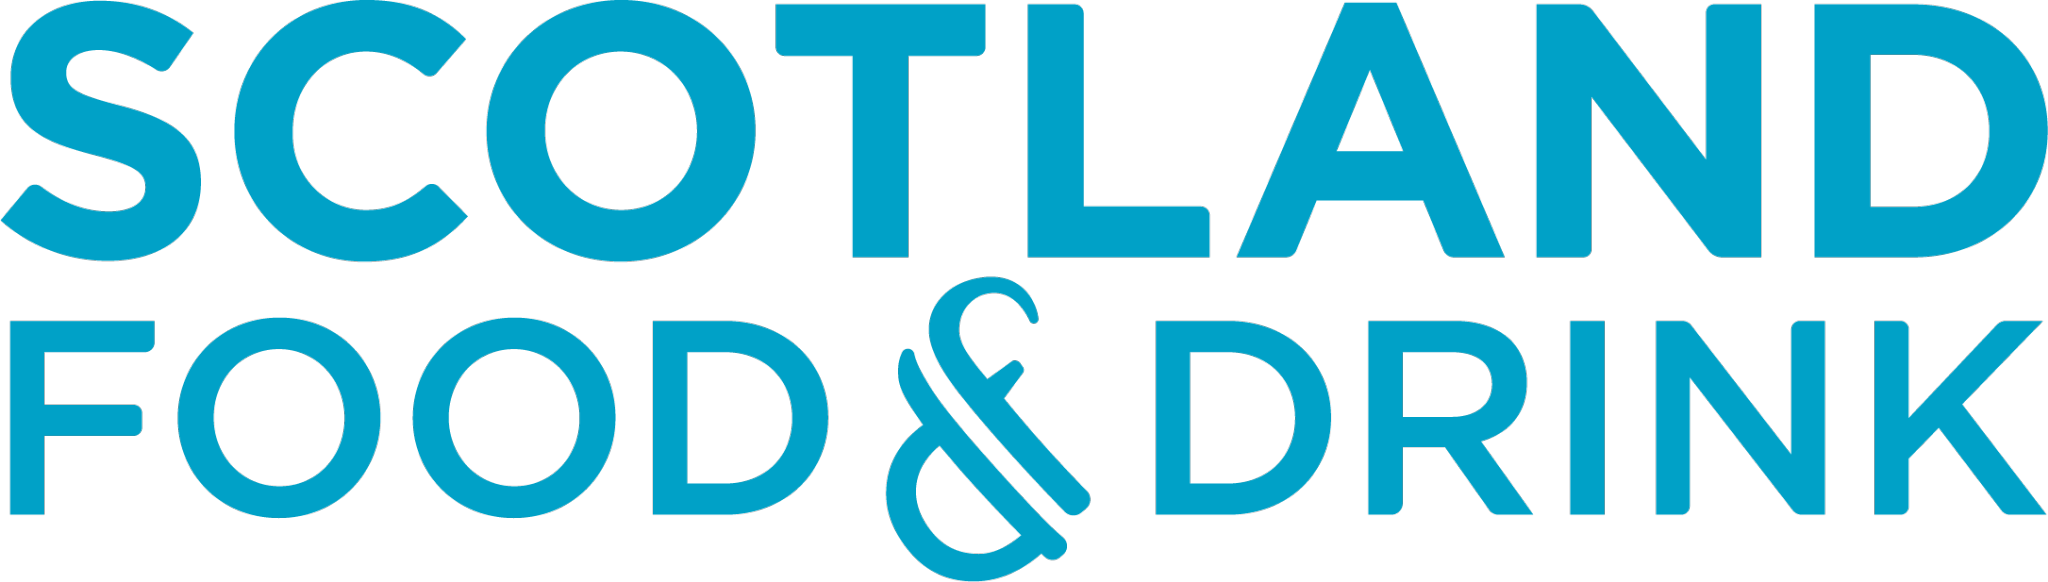 Scotland Food & Drink Logo